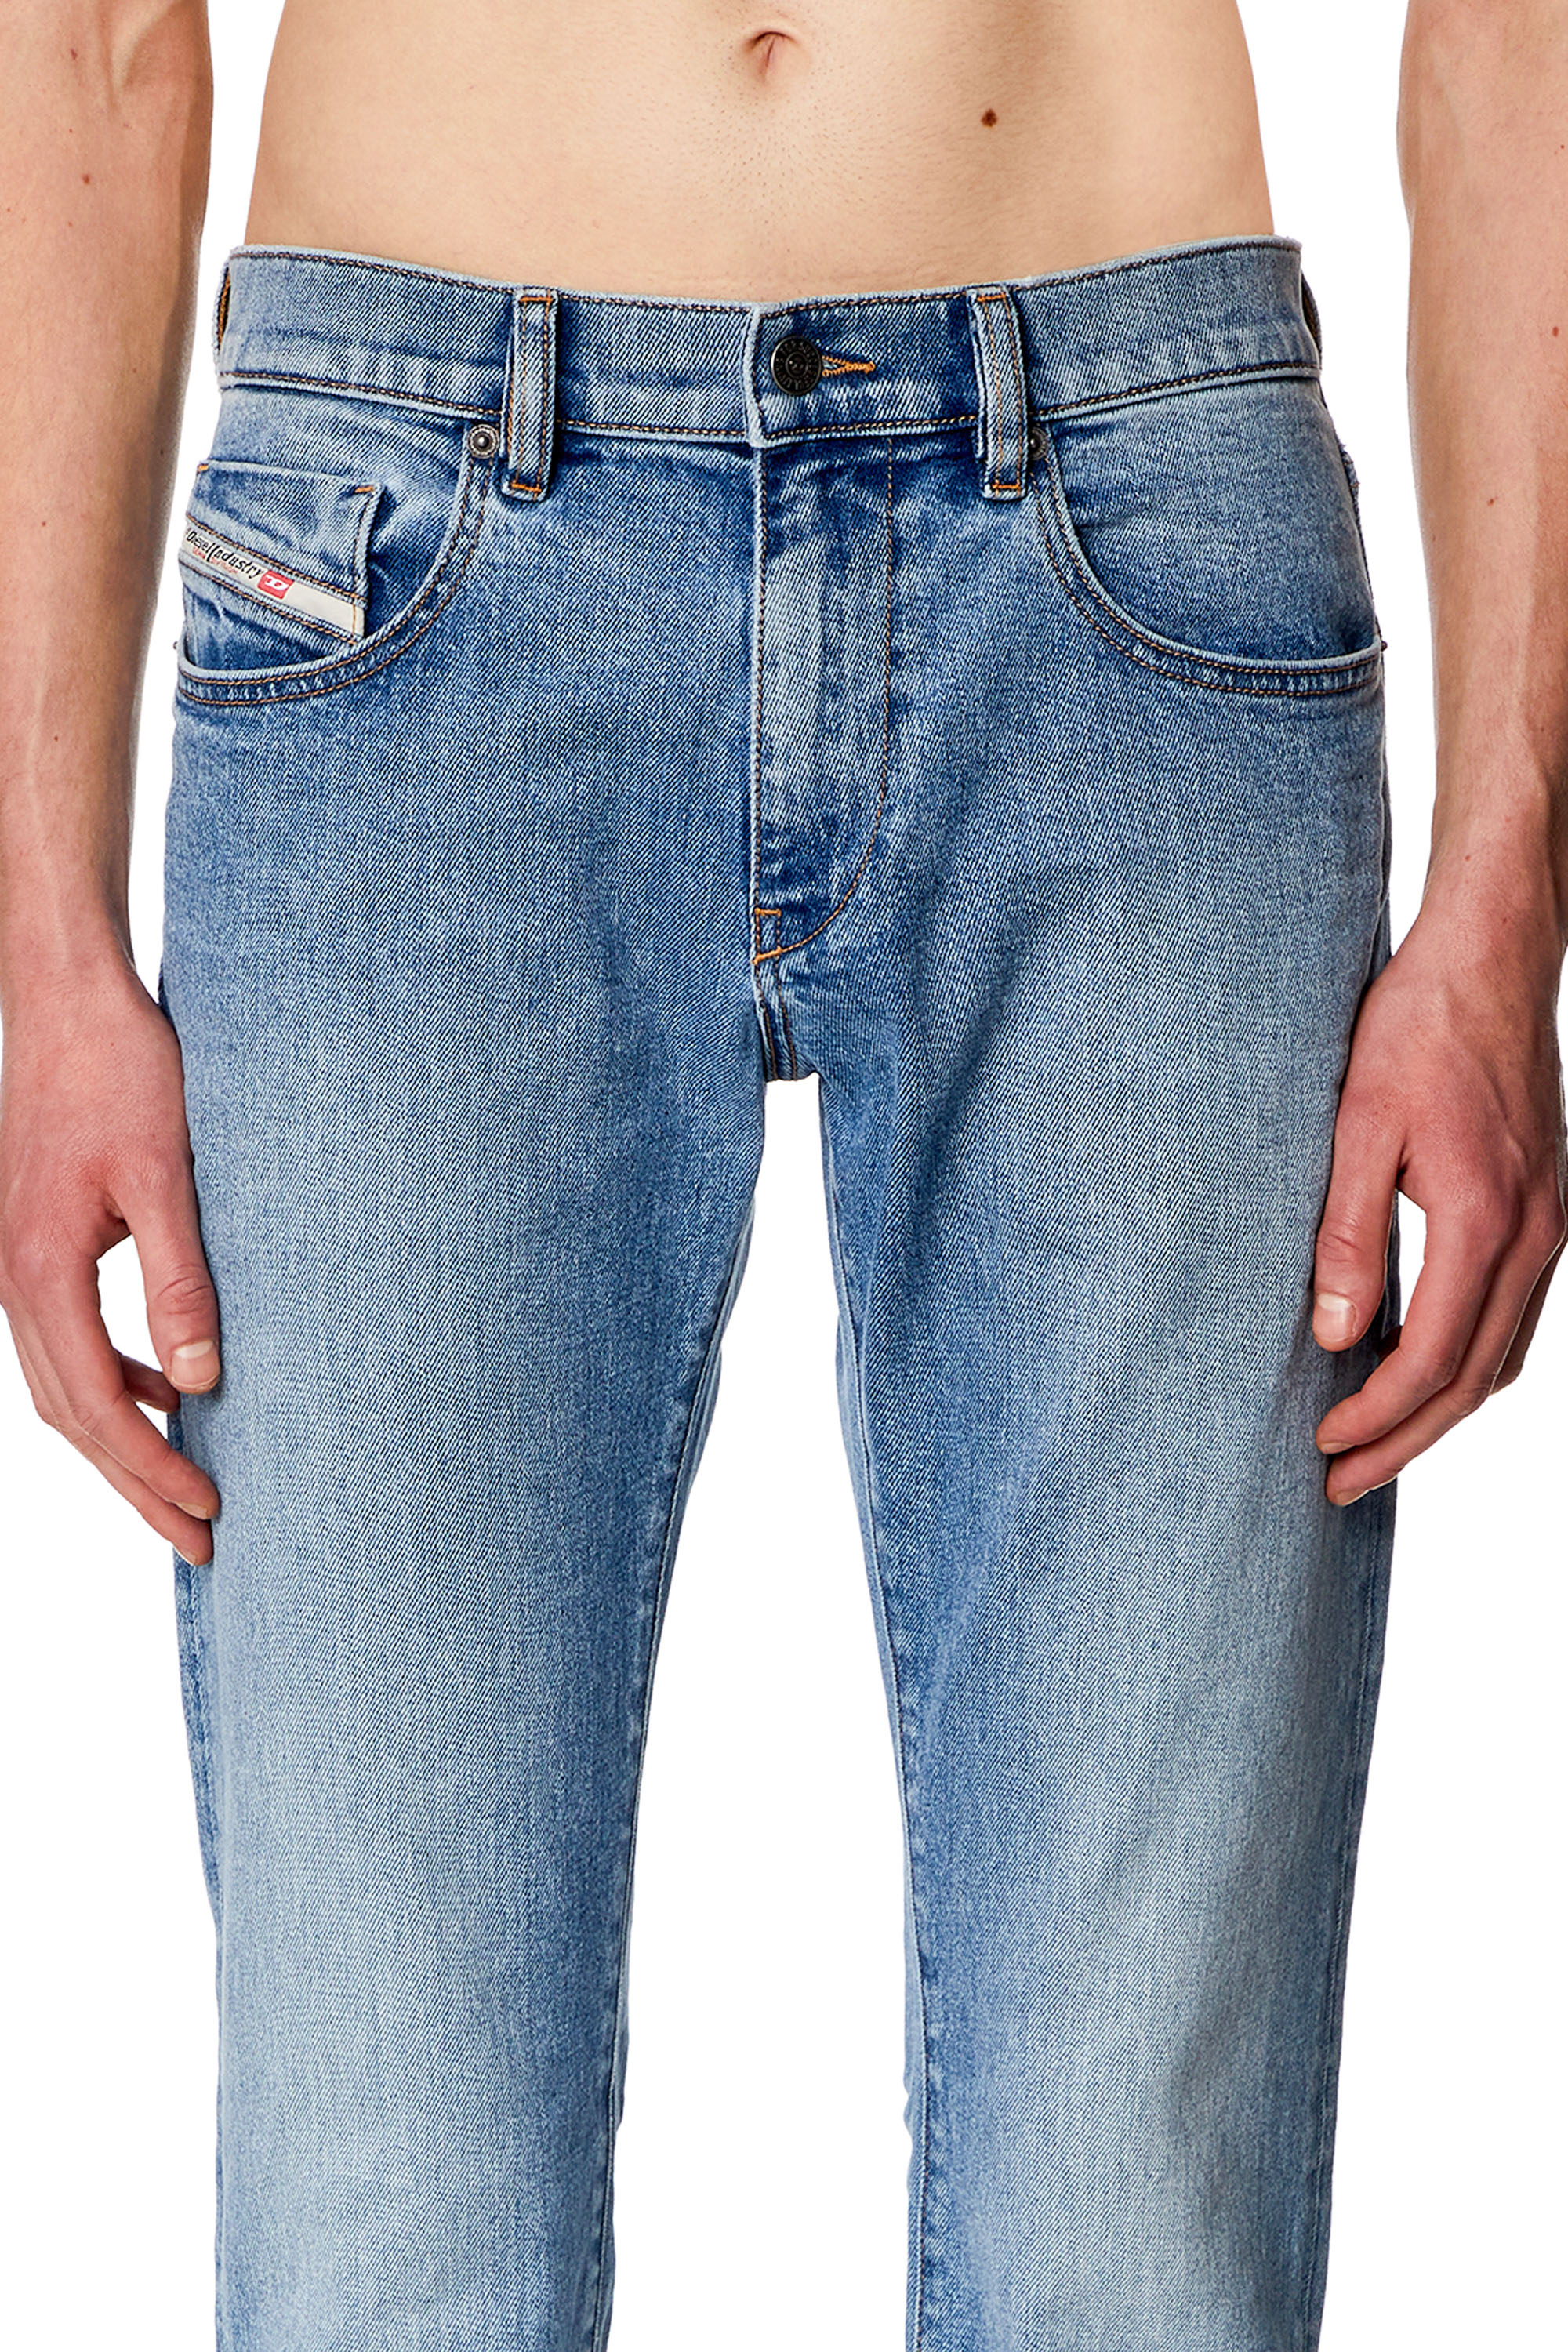 Diesel - Slim Jeans 2019 D-Strukt 0CLAF, Hombre Slim Jeans - 2019 D-Strukt in Azul marino - Image 4